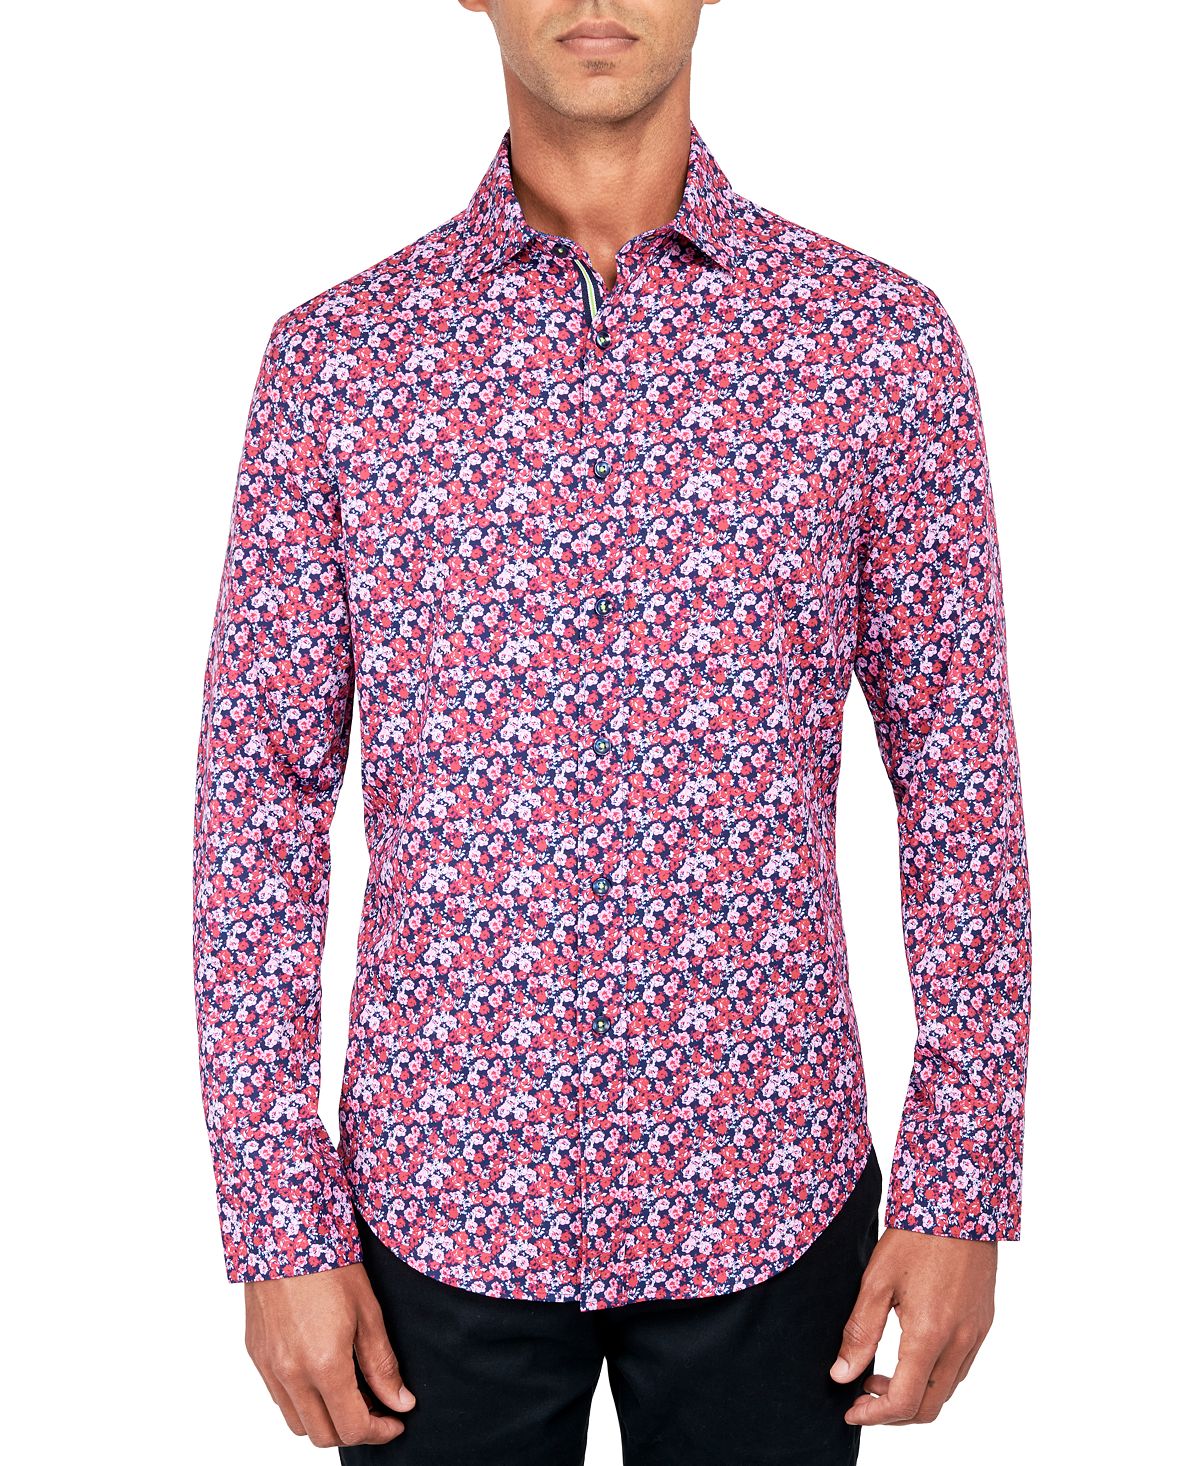 цена Мужская эластичная рубашка на пуговицах с принтом роз, стандартного кроя, без утюга Society of Threads